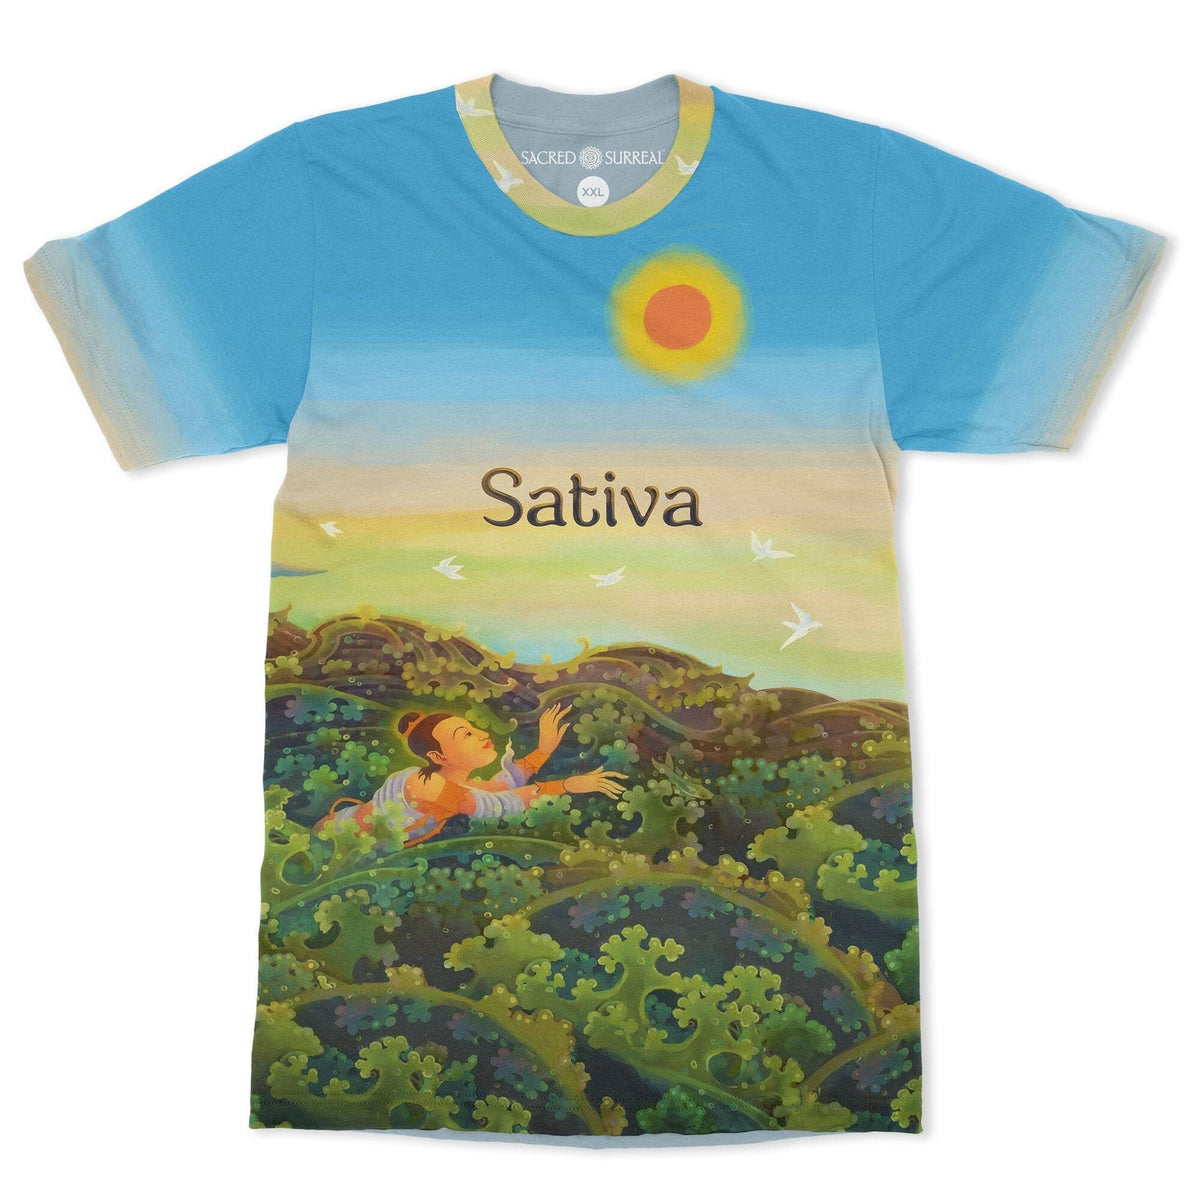 AOP T-Shirt Sativa Bodhisattva Kundalini Cannabis Buddhist 420 Weed Herb Ganja Zen Trippy T-Shirt